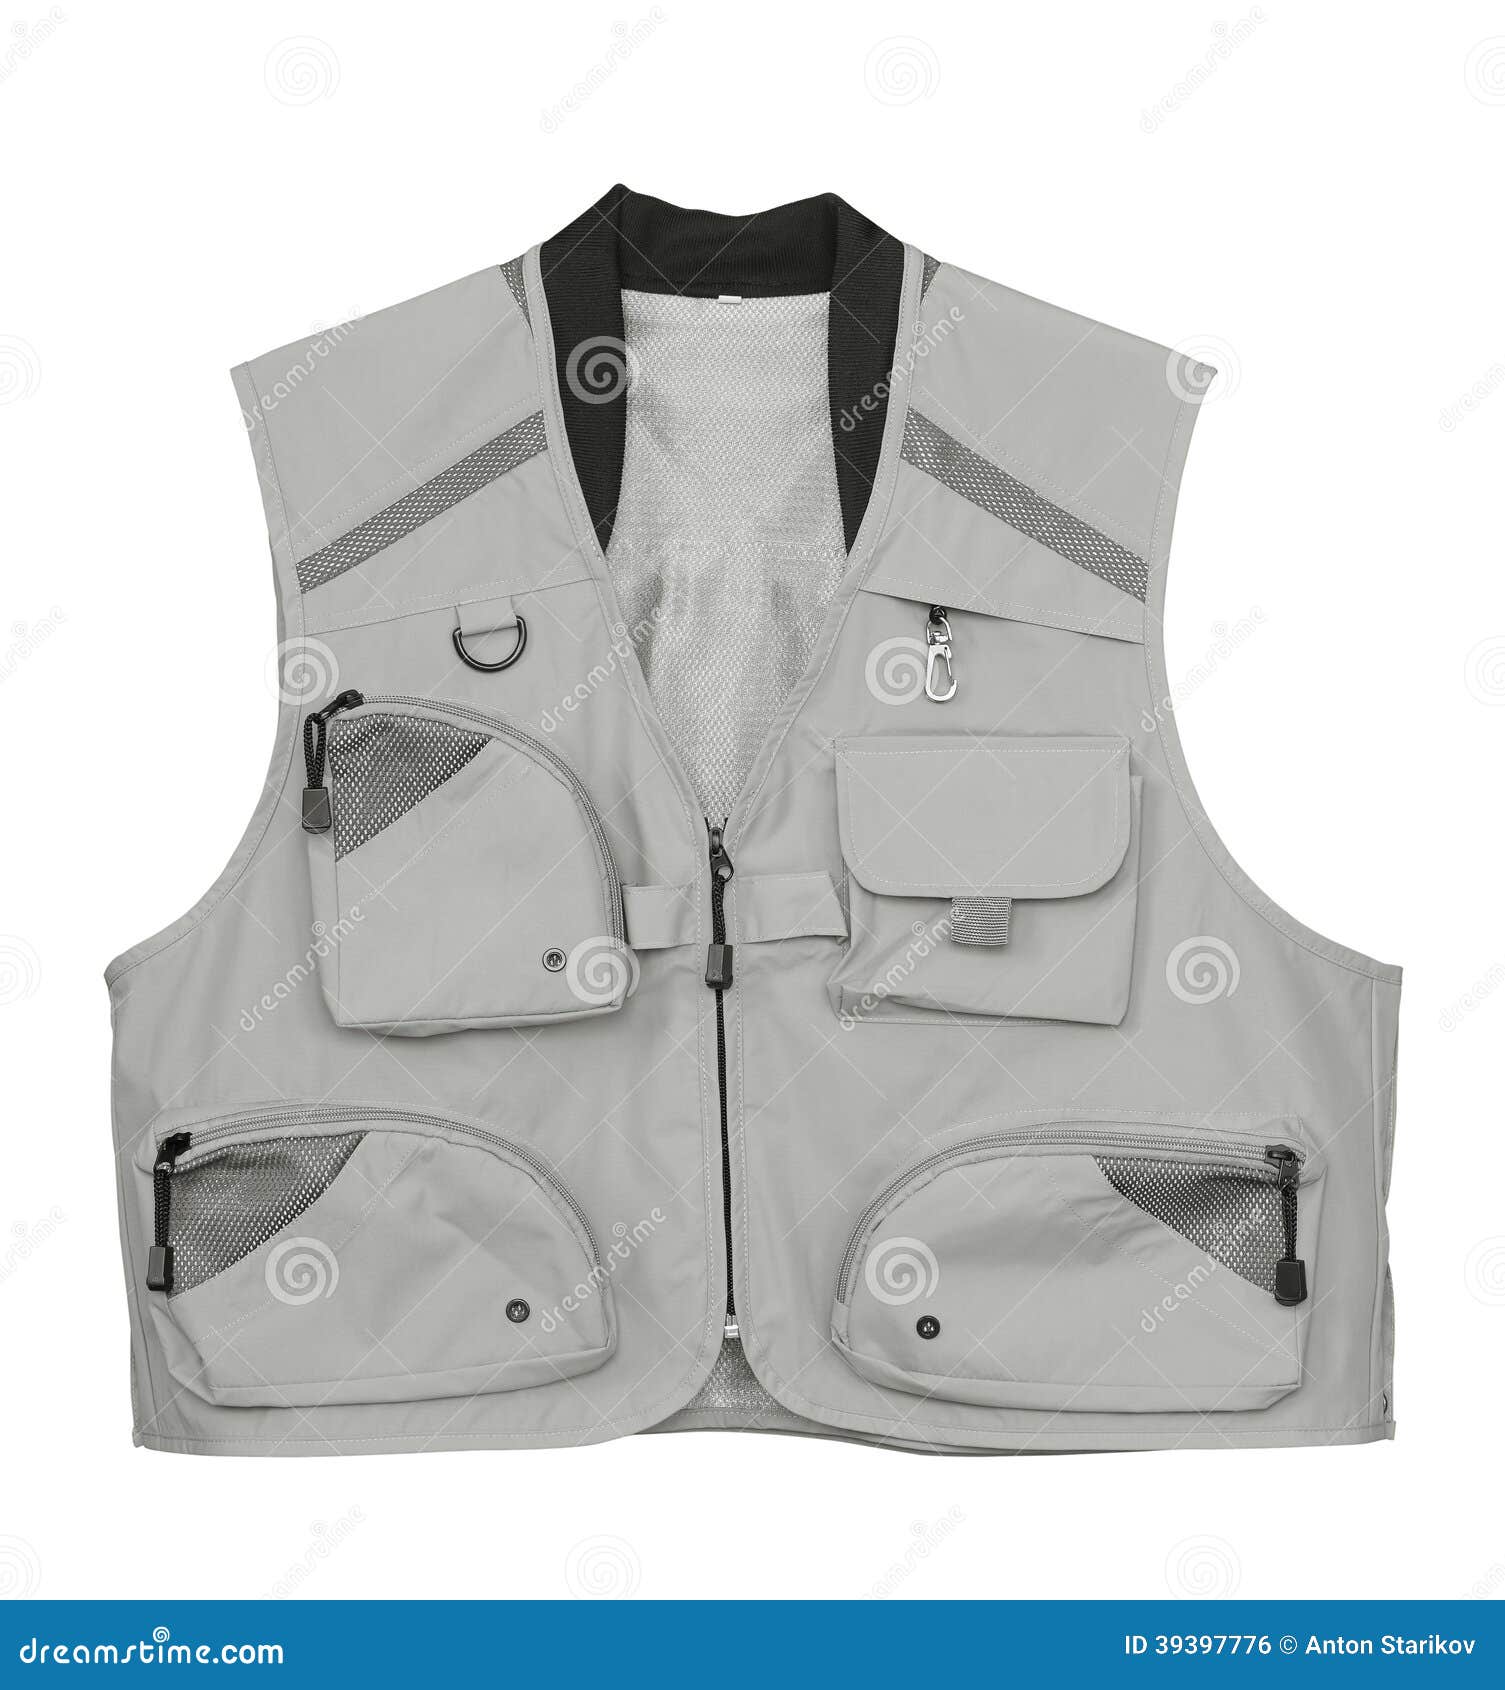 Fishing vest stock photo. Image of hobbies, grey, fashion - 39397776